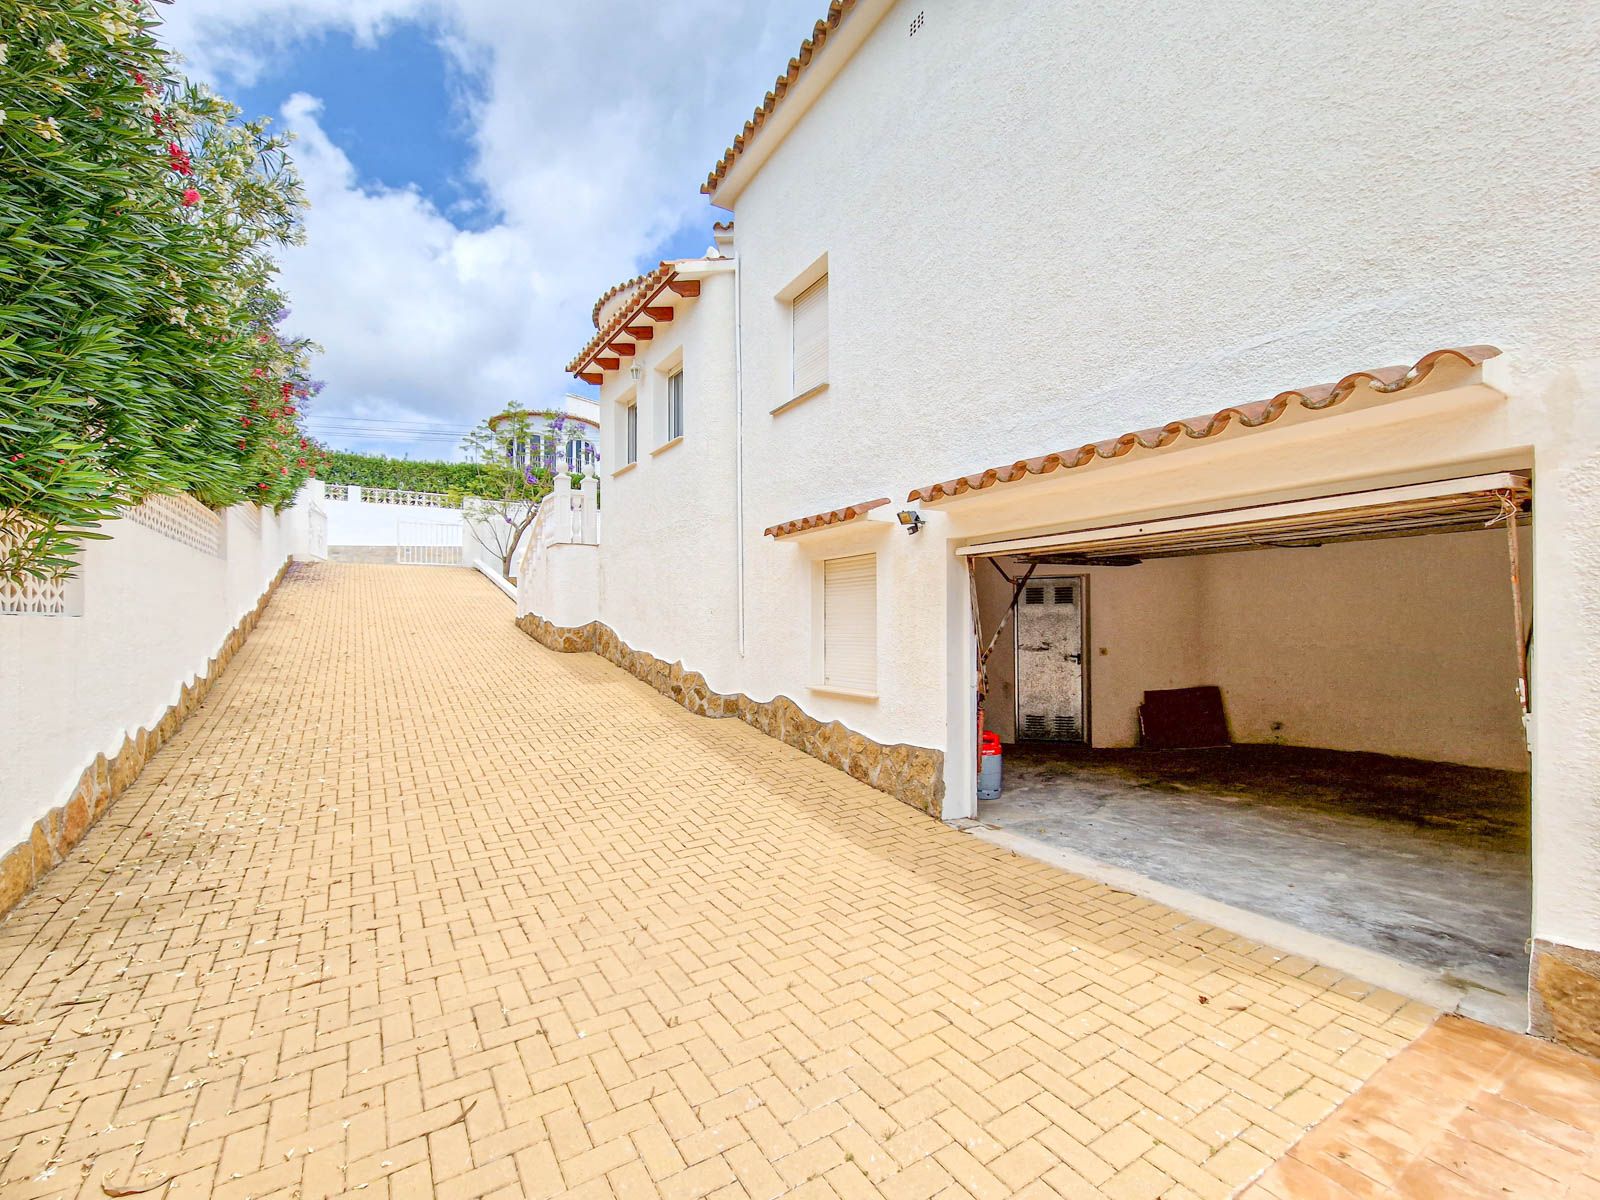 Gerenoveerde villa in Ibiza-stijl te koop in Costera del Mar Moraira, Costa Blanca